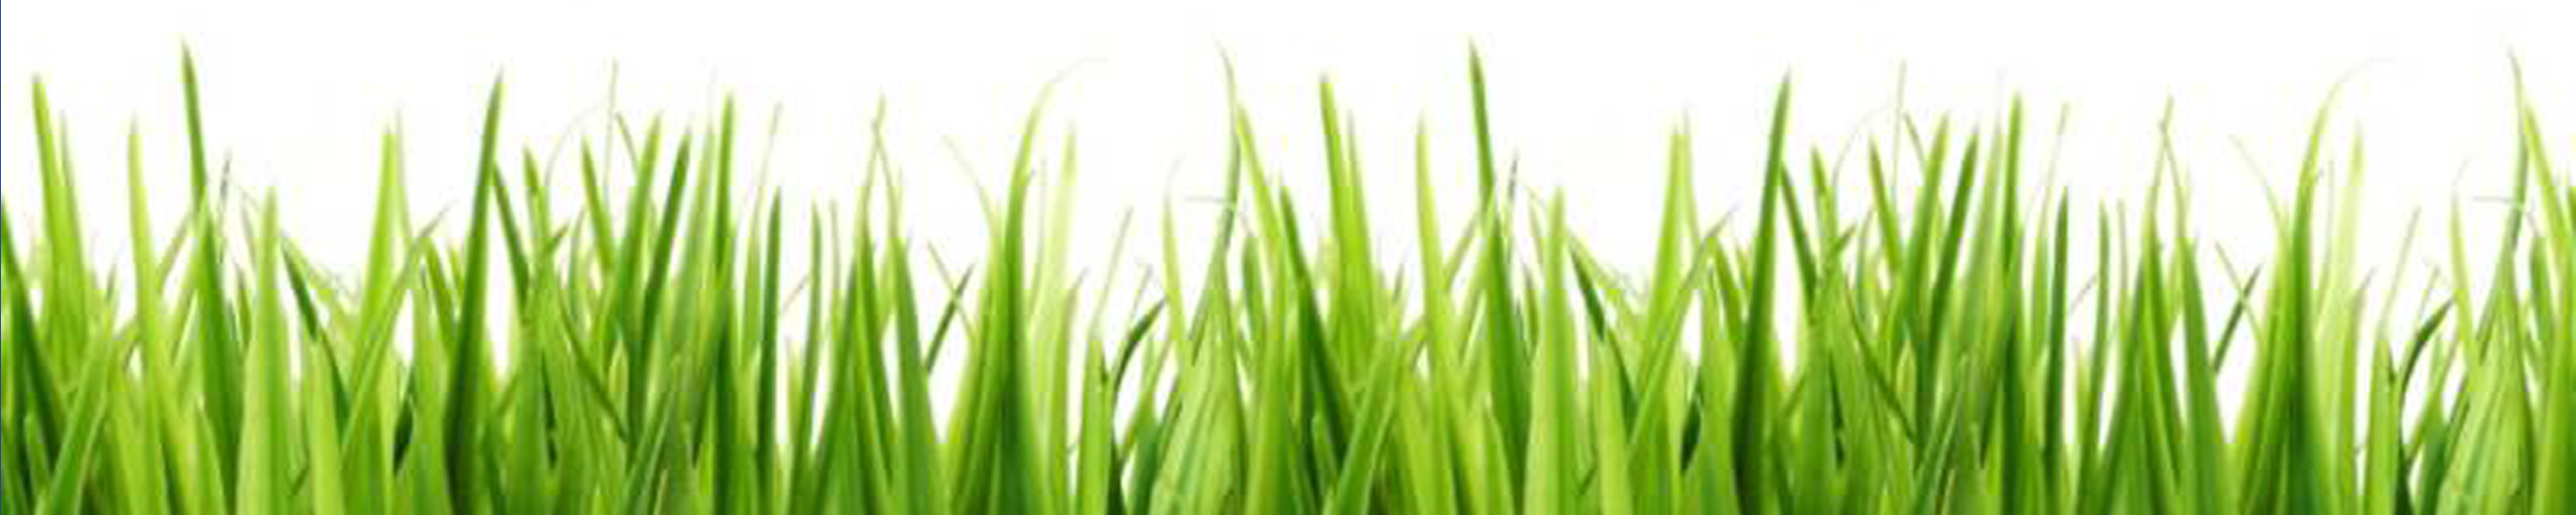 clip art free grass - photo #20